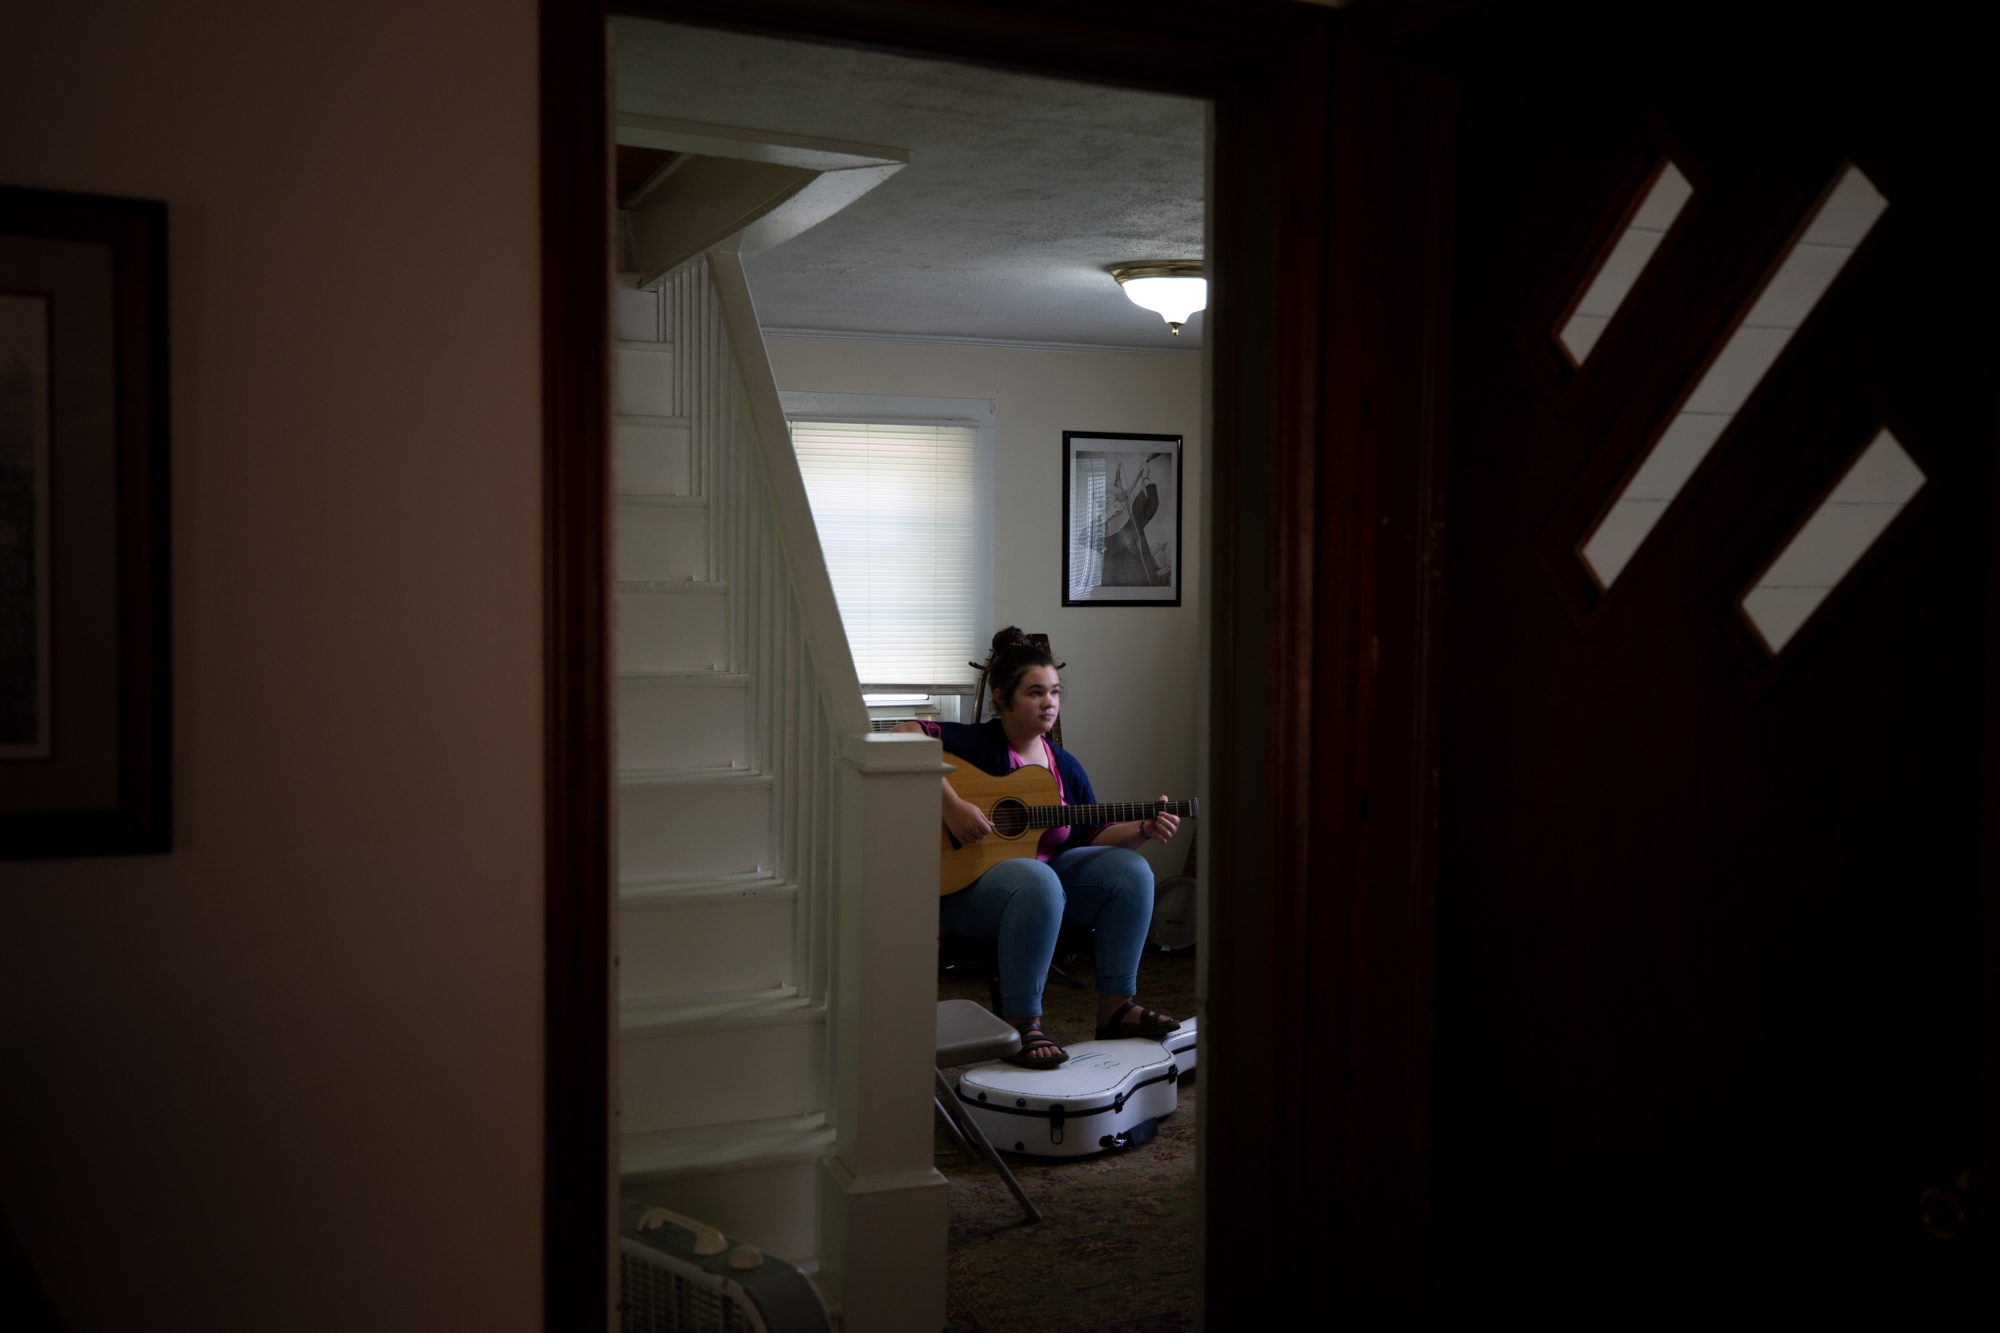 Shot through a door of a girl playing the guitar